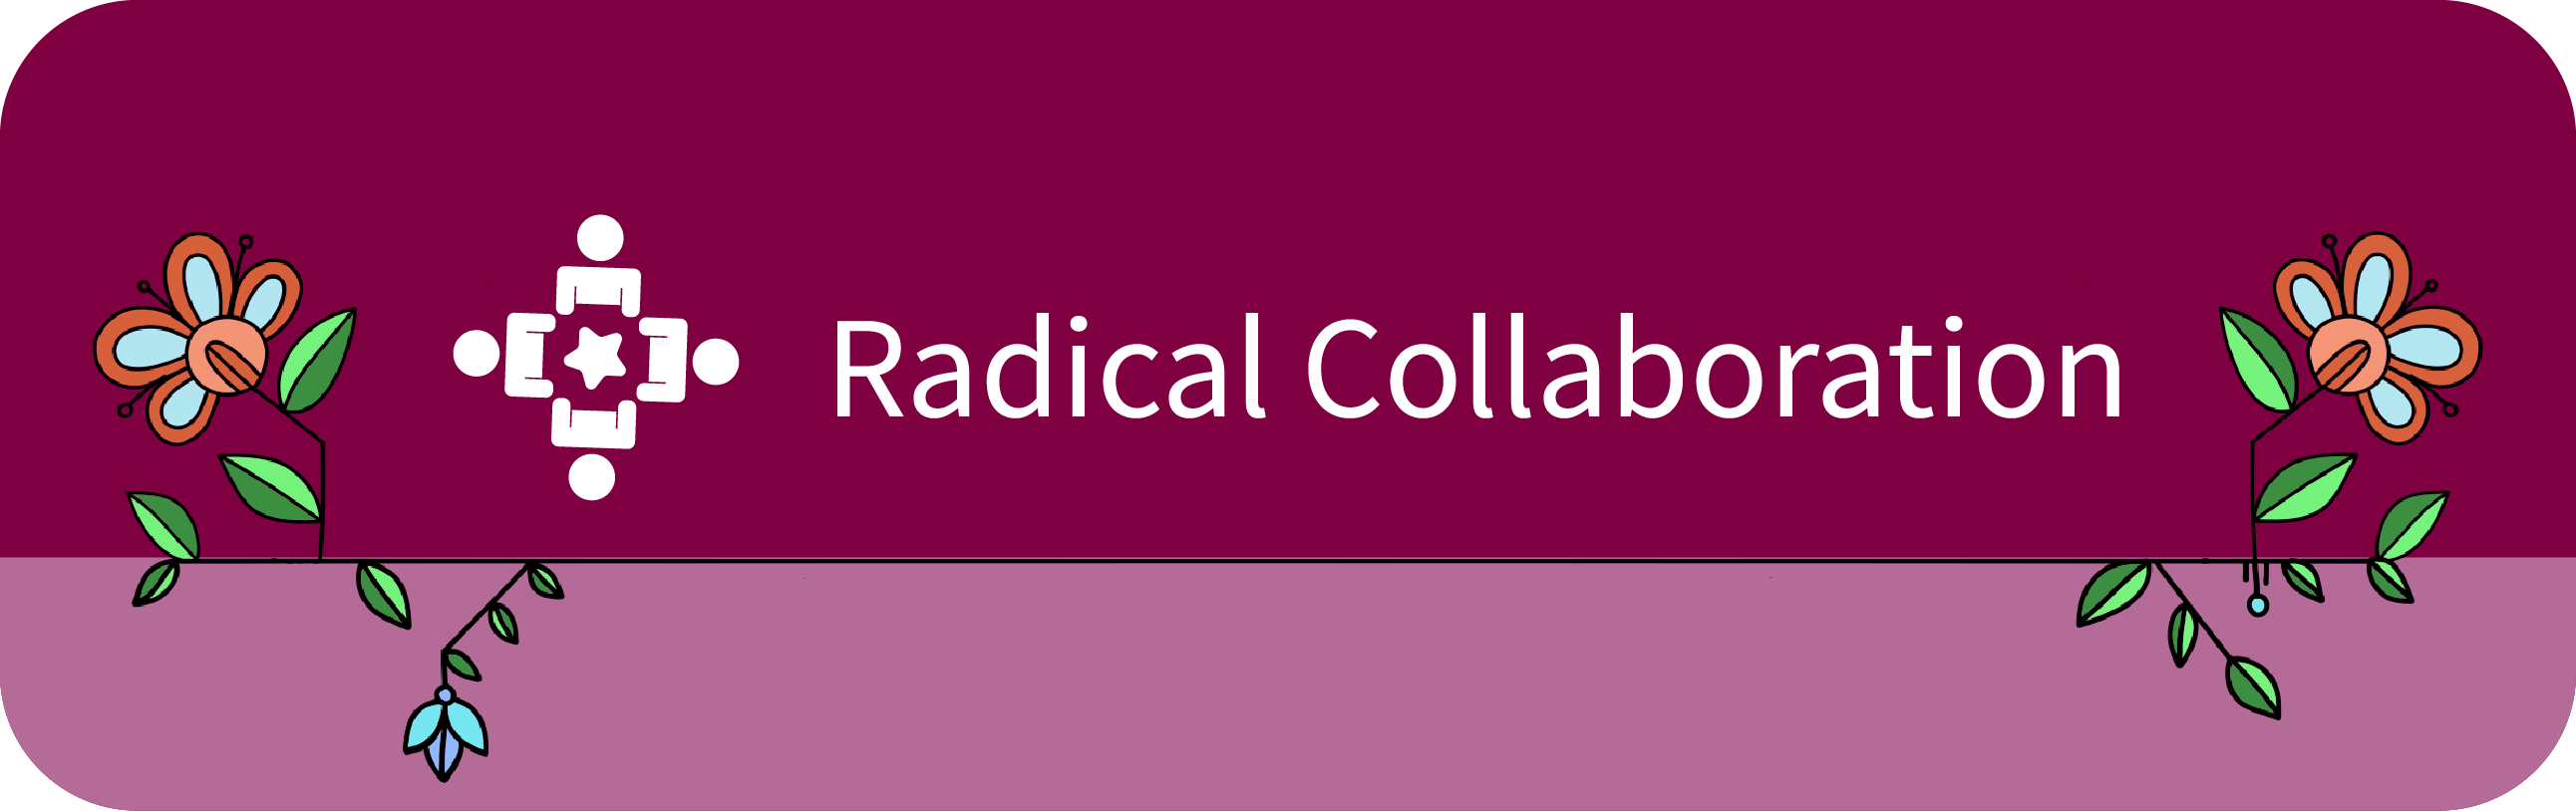 radical collaboration